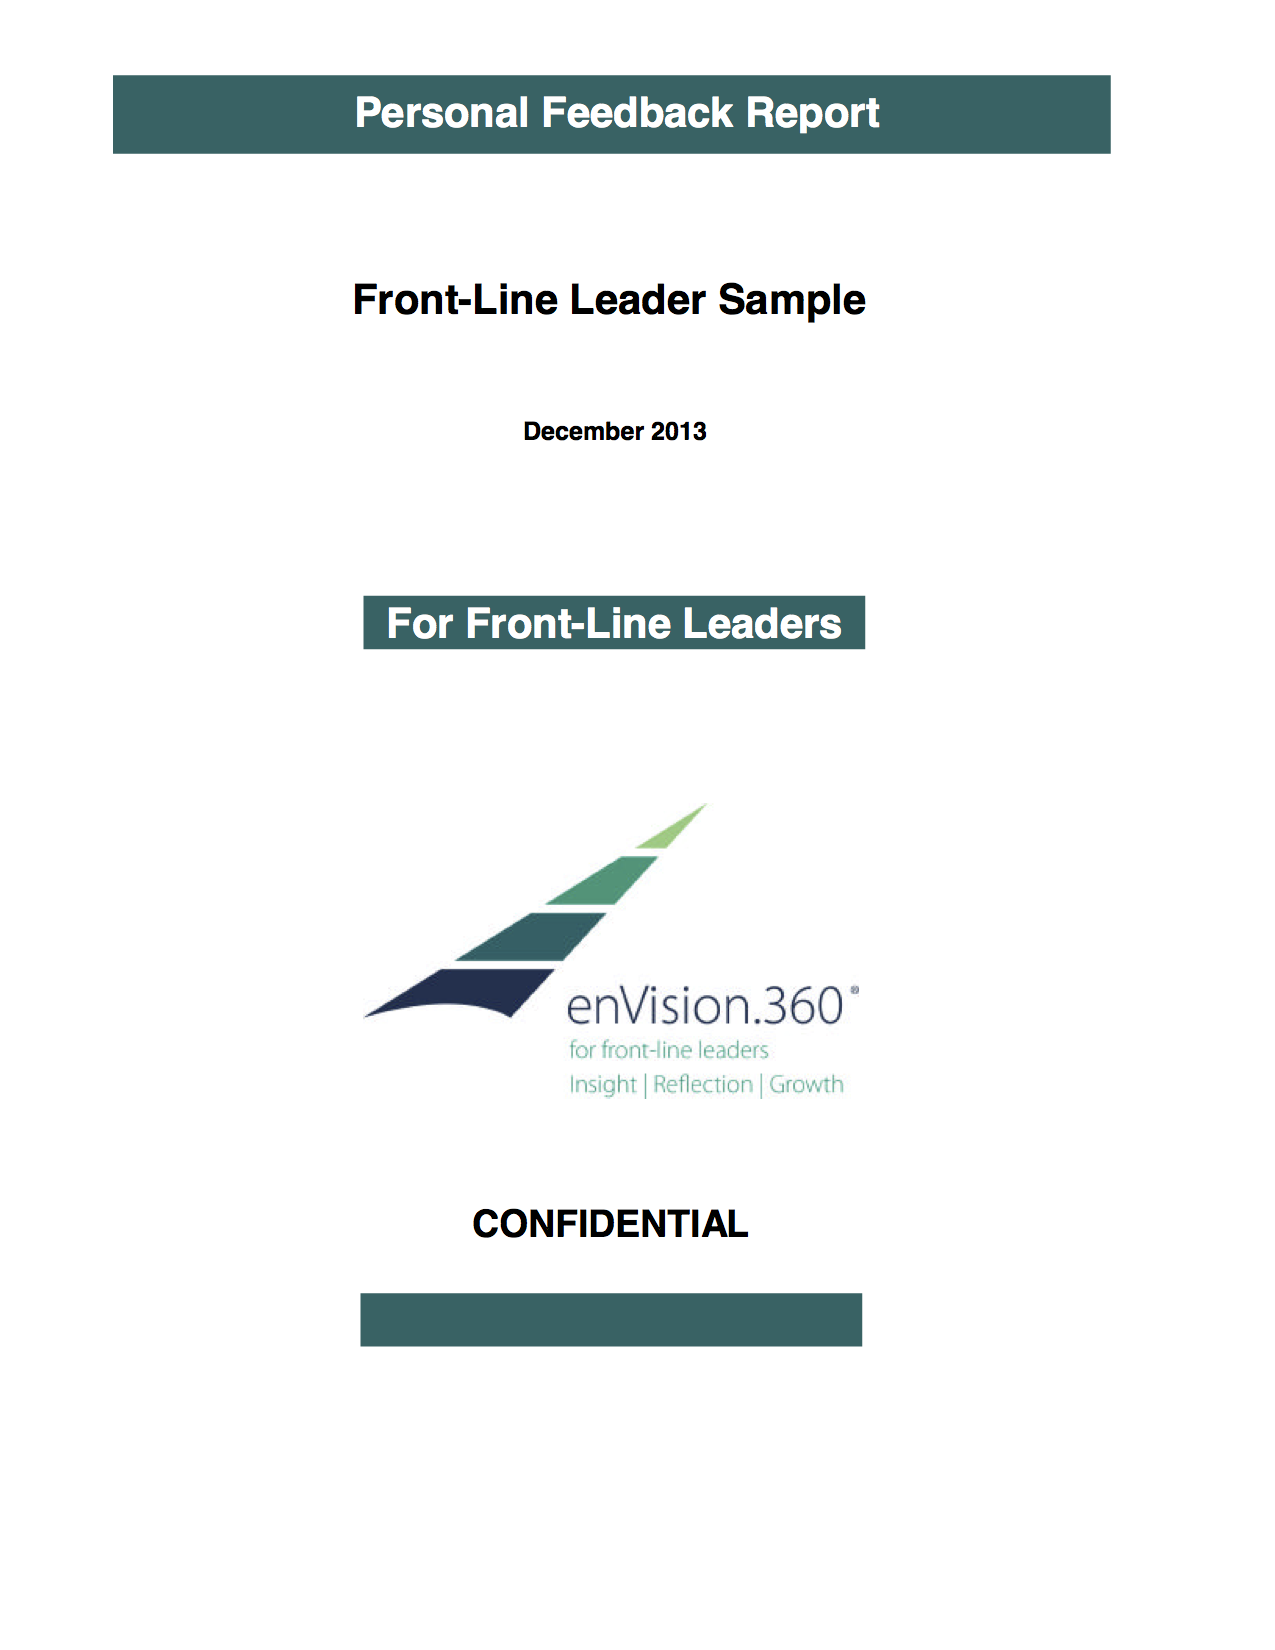 enVision.360 sample Front line leader report